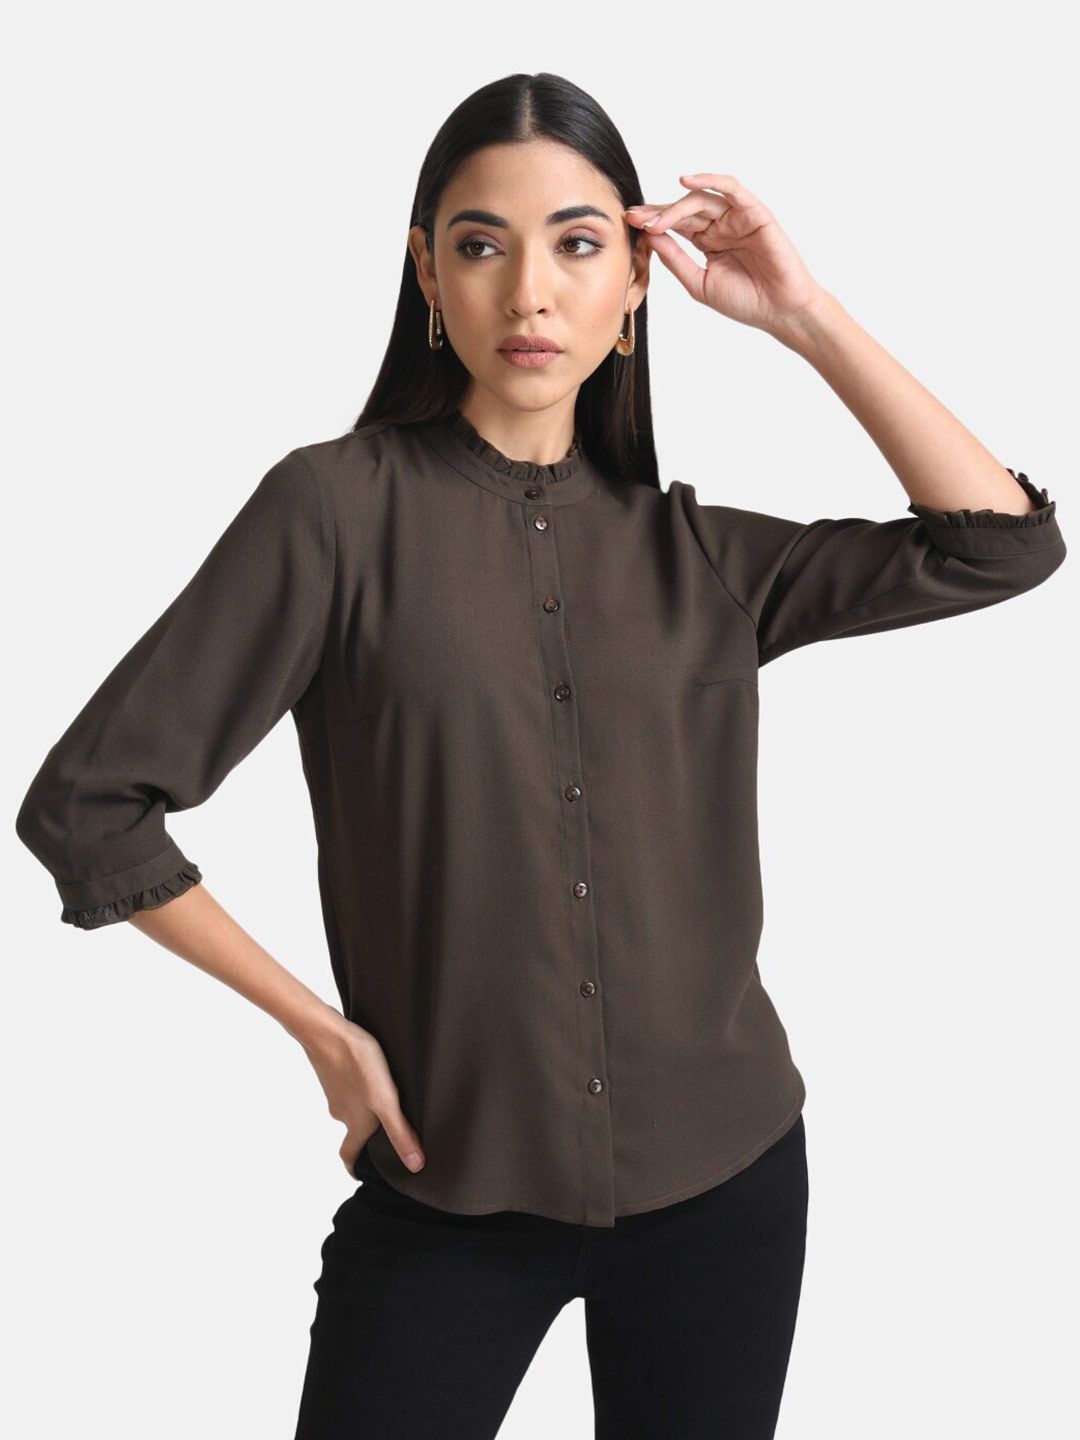 Kazo Women Shirt Style Top Price in India